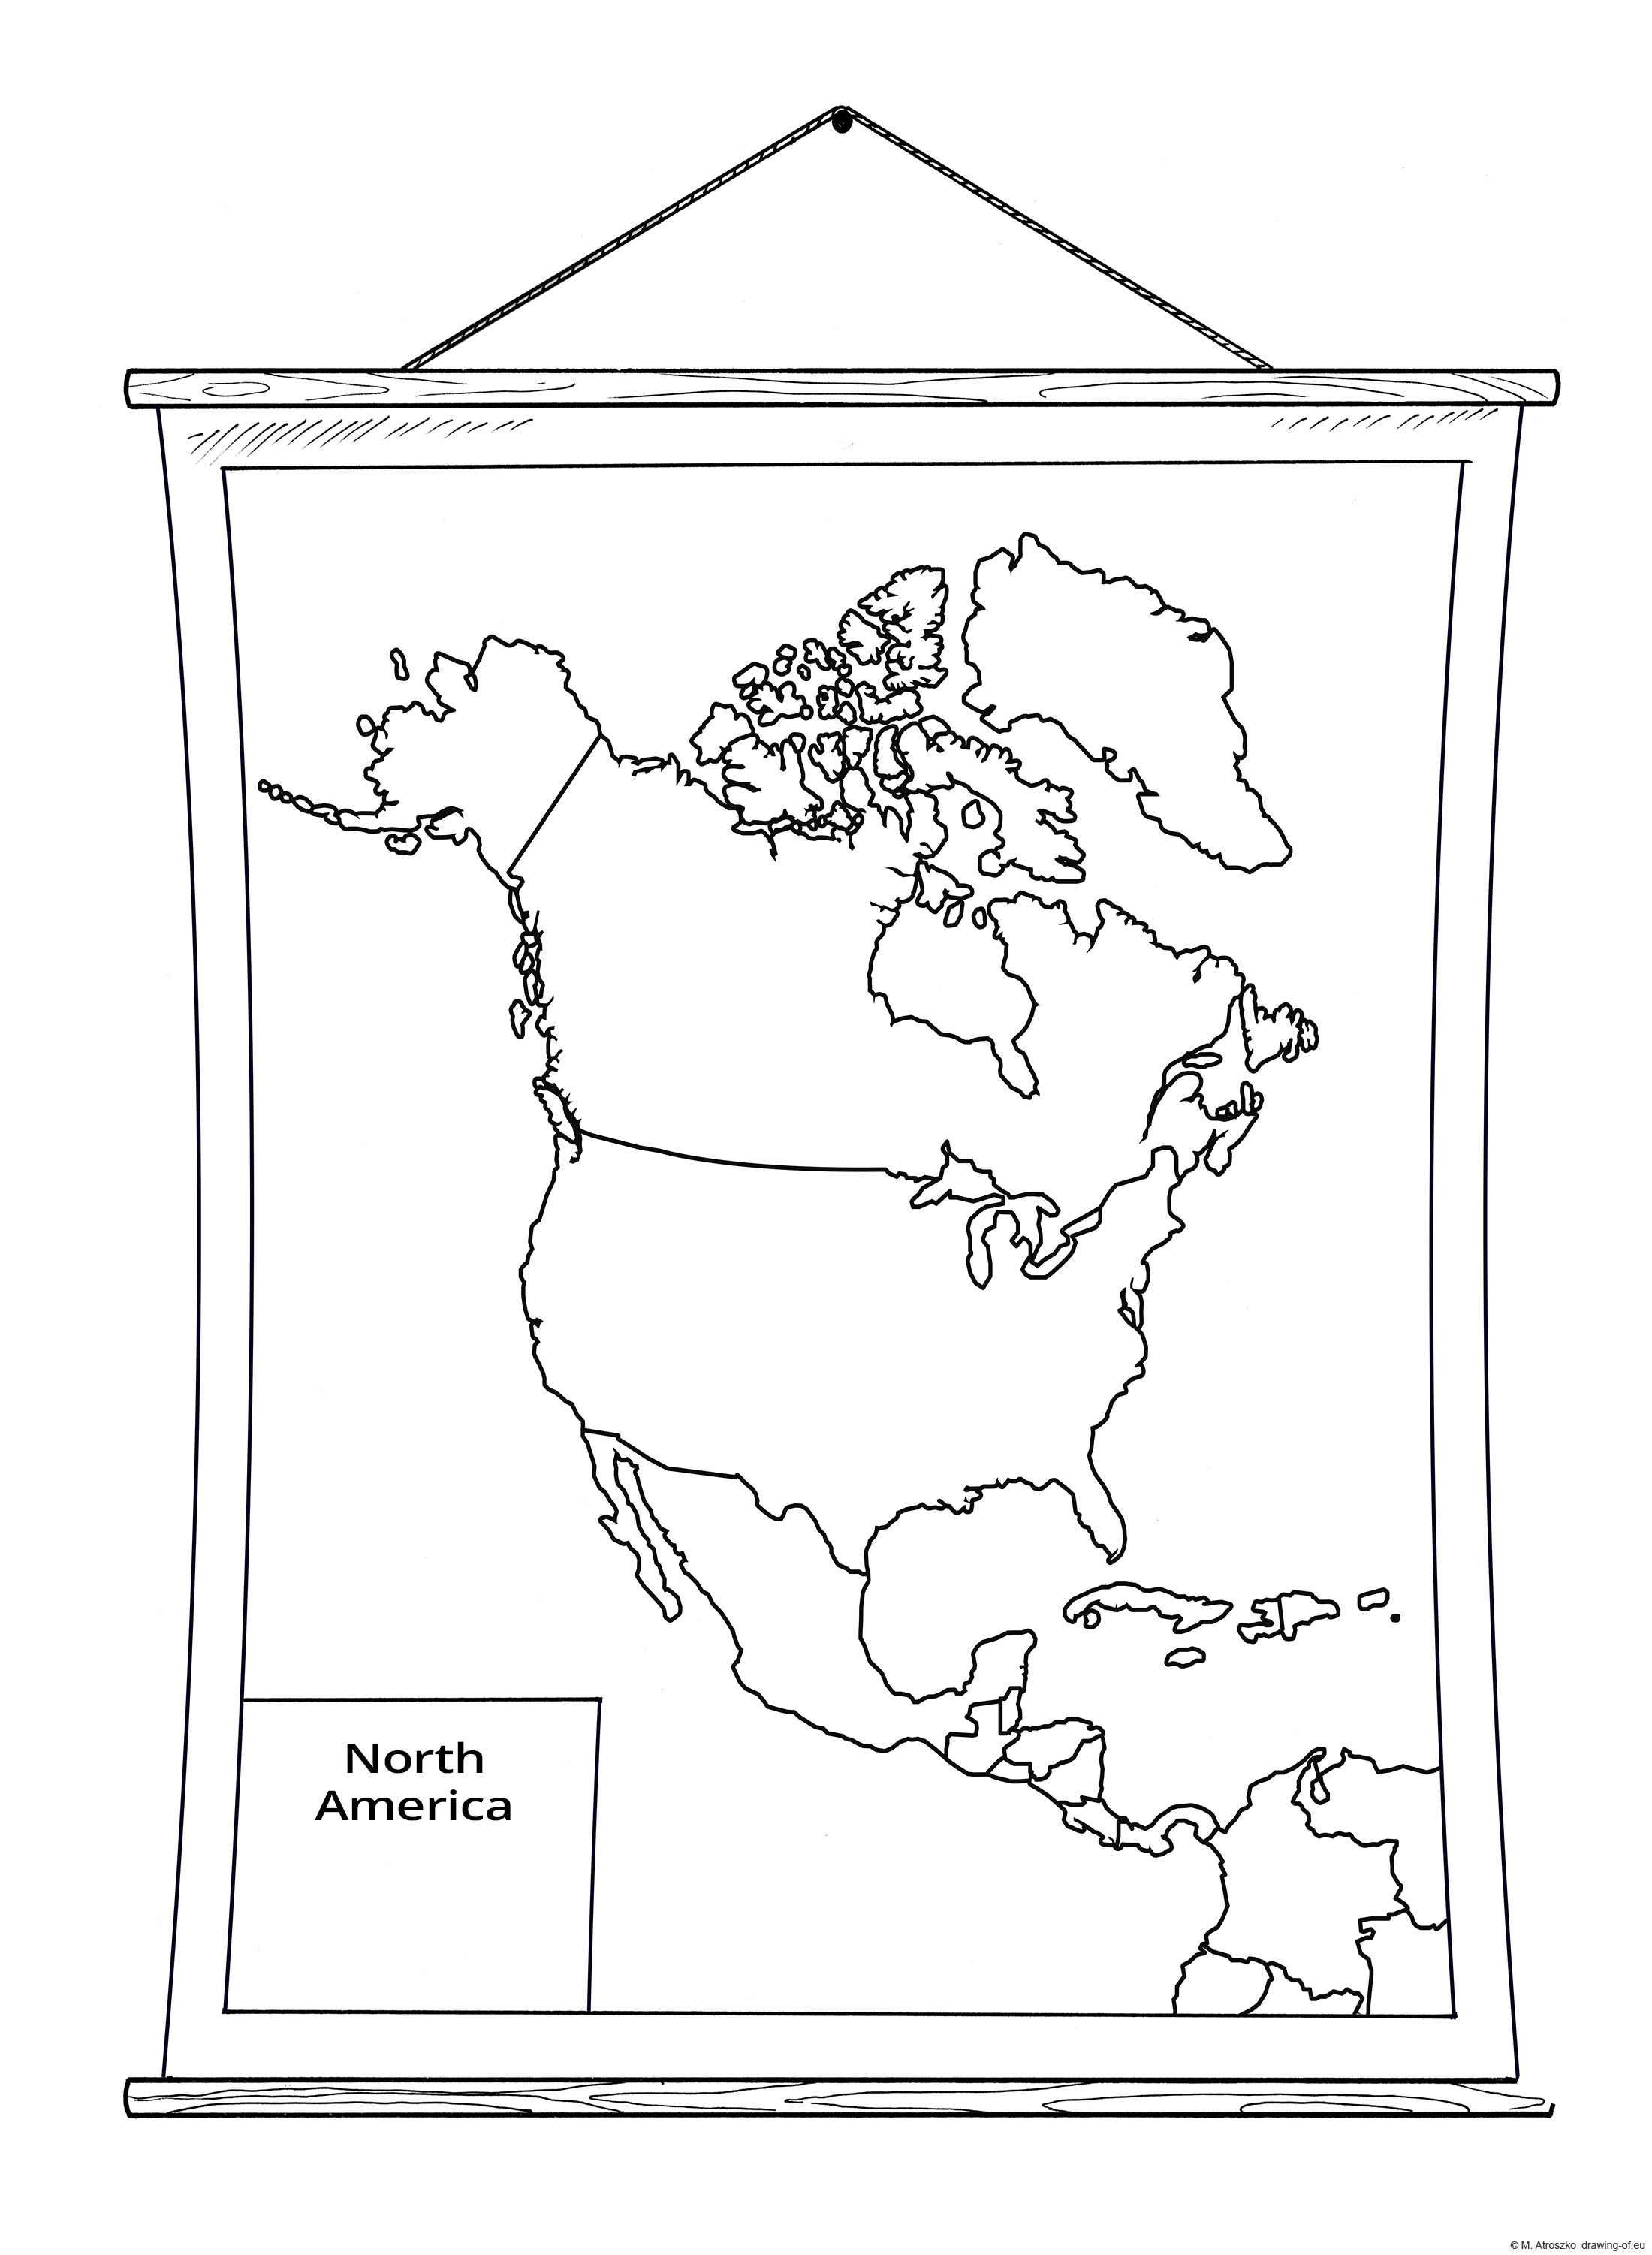 School wall map of North America